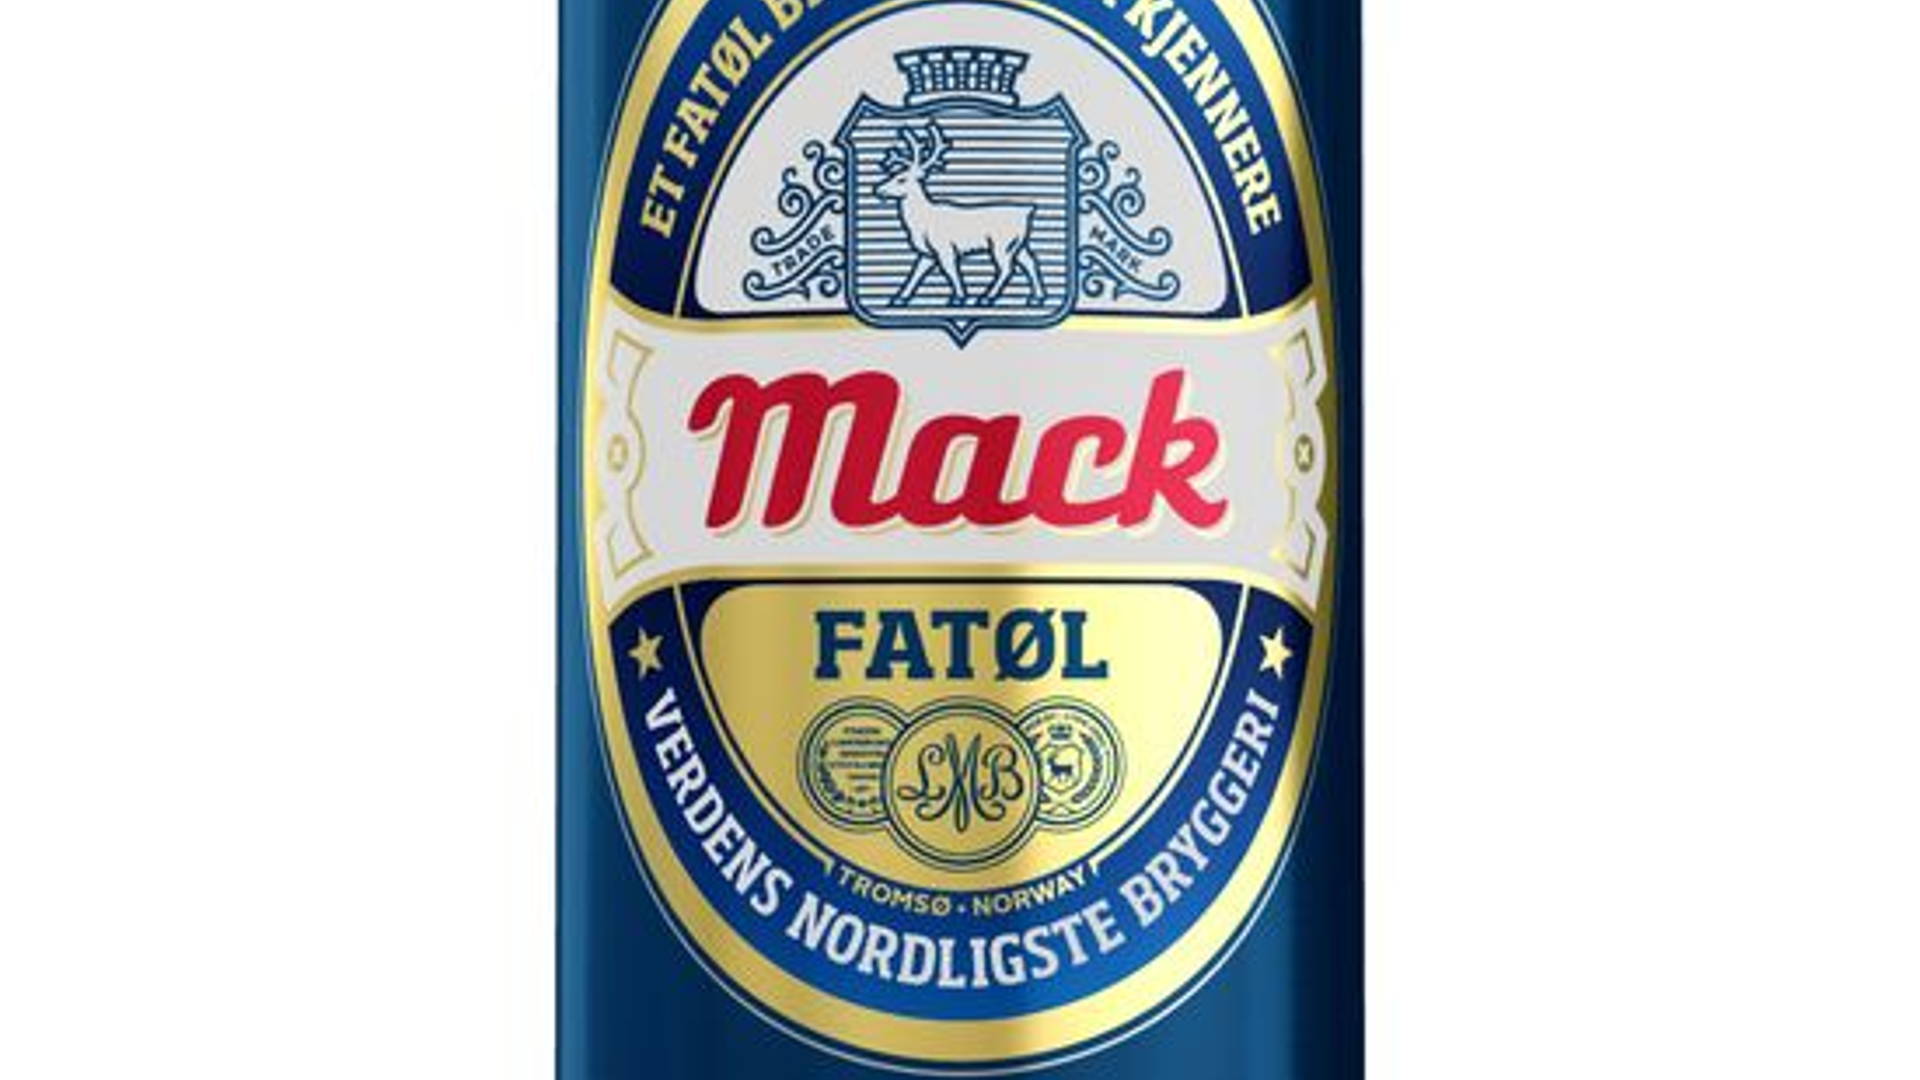 Featured image for Mack Beer rebranding